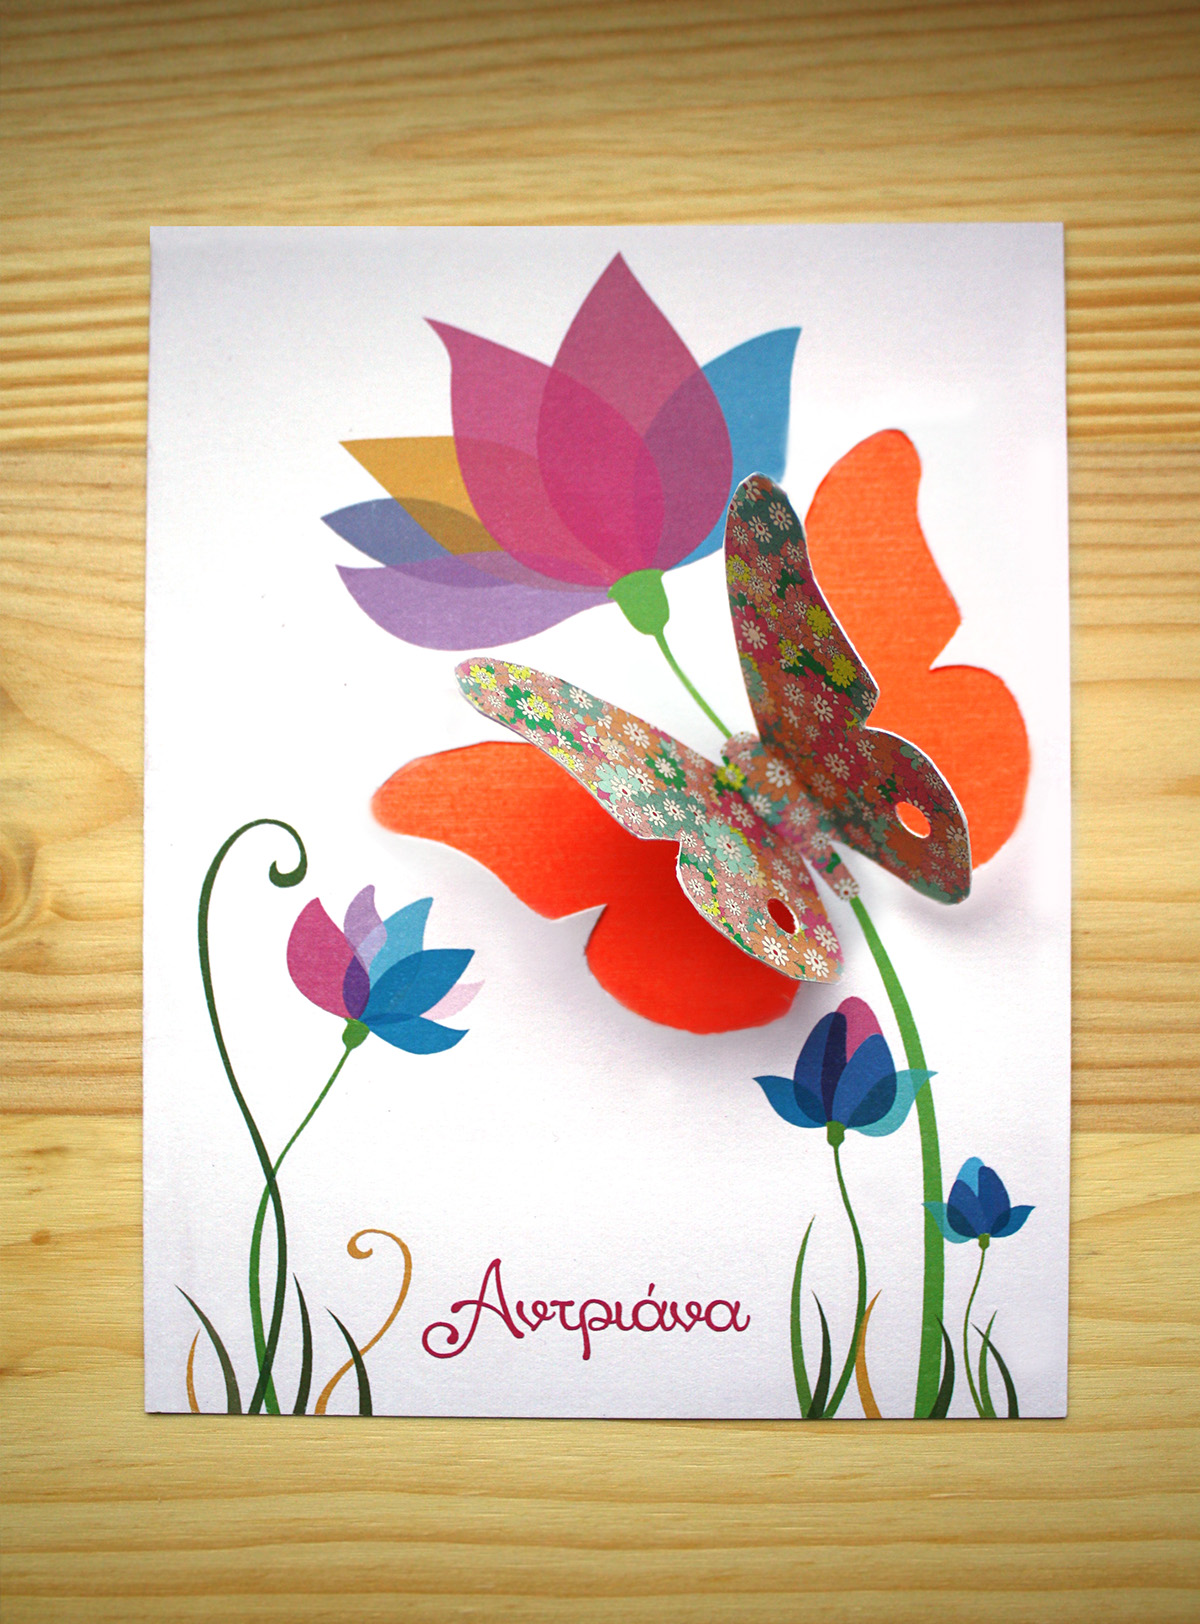 spring christening Invitation flower butterfly πρόσκληση βαφτιση θεμα ανοιξη Πεταλούδα Roses petals colours handmade